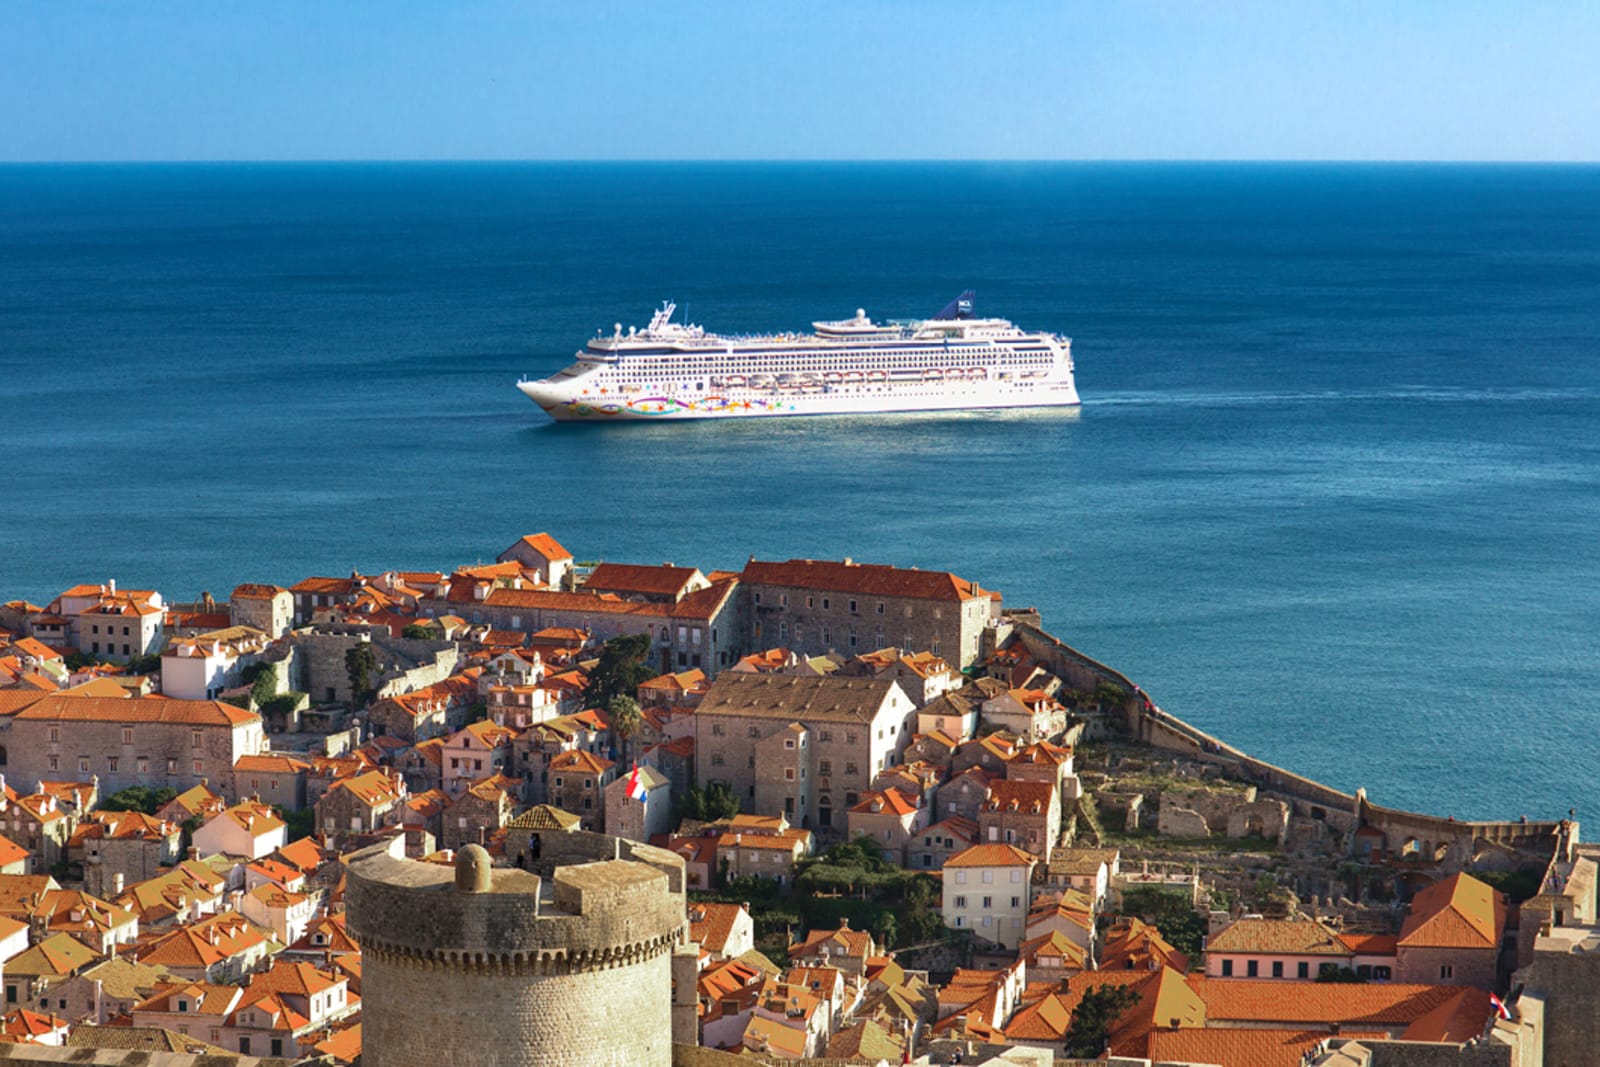 Norwegian Cruise Line vessel in the Mediterranean